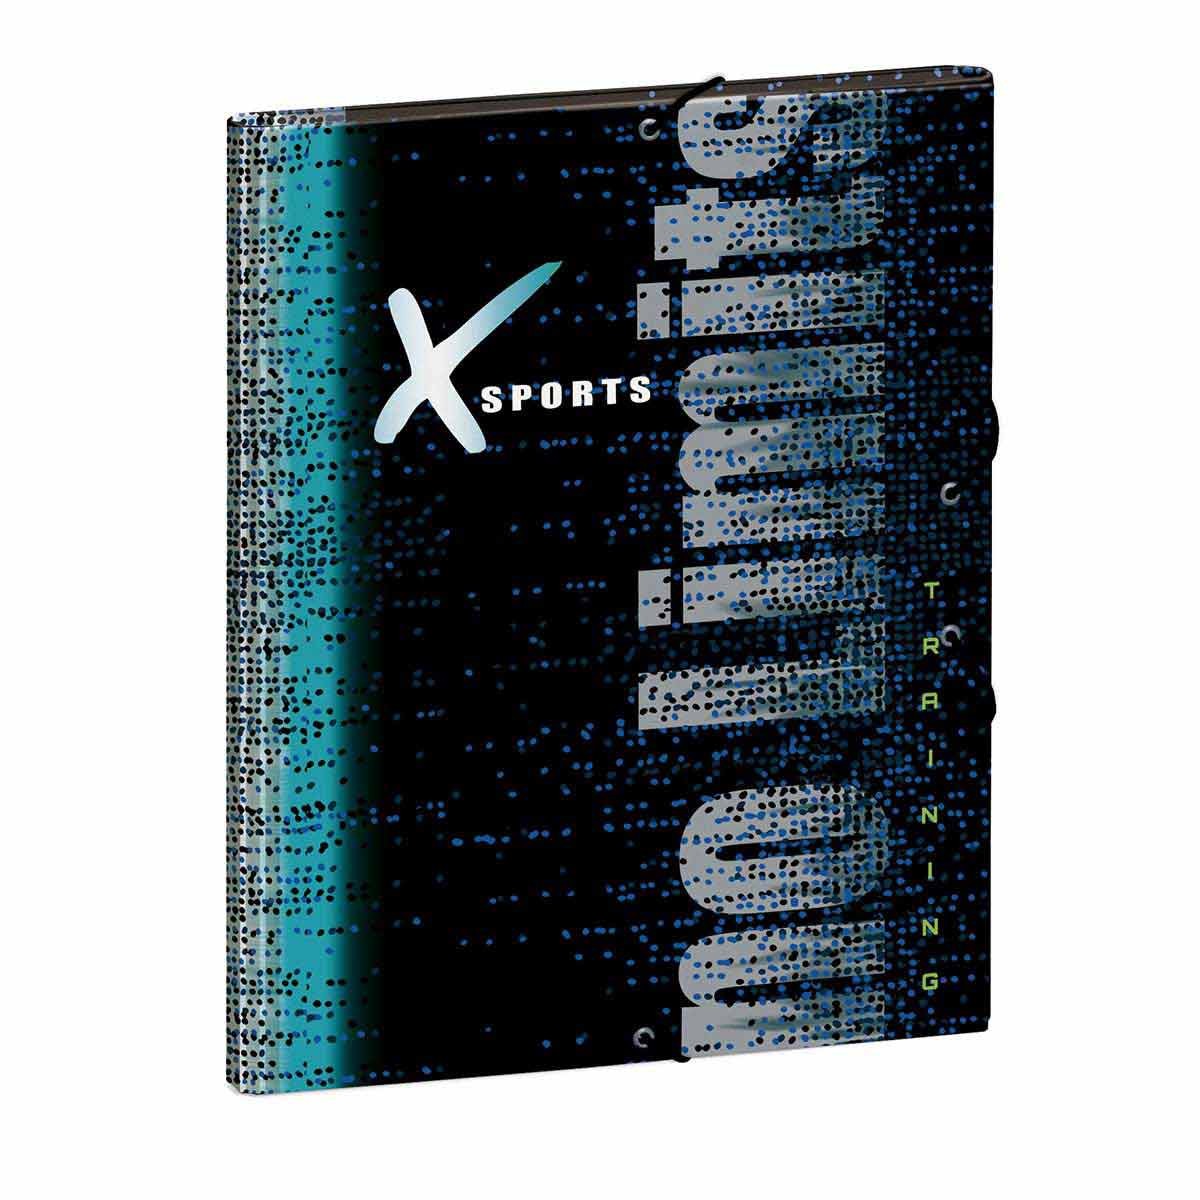 XSPORTS HARD COVER FOLIO WITH ELASTIC 26X33.5X3CM